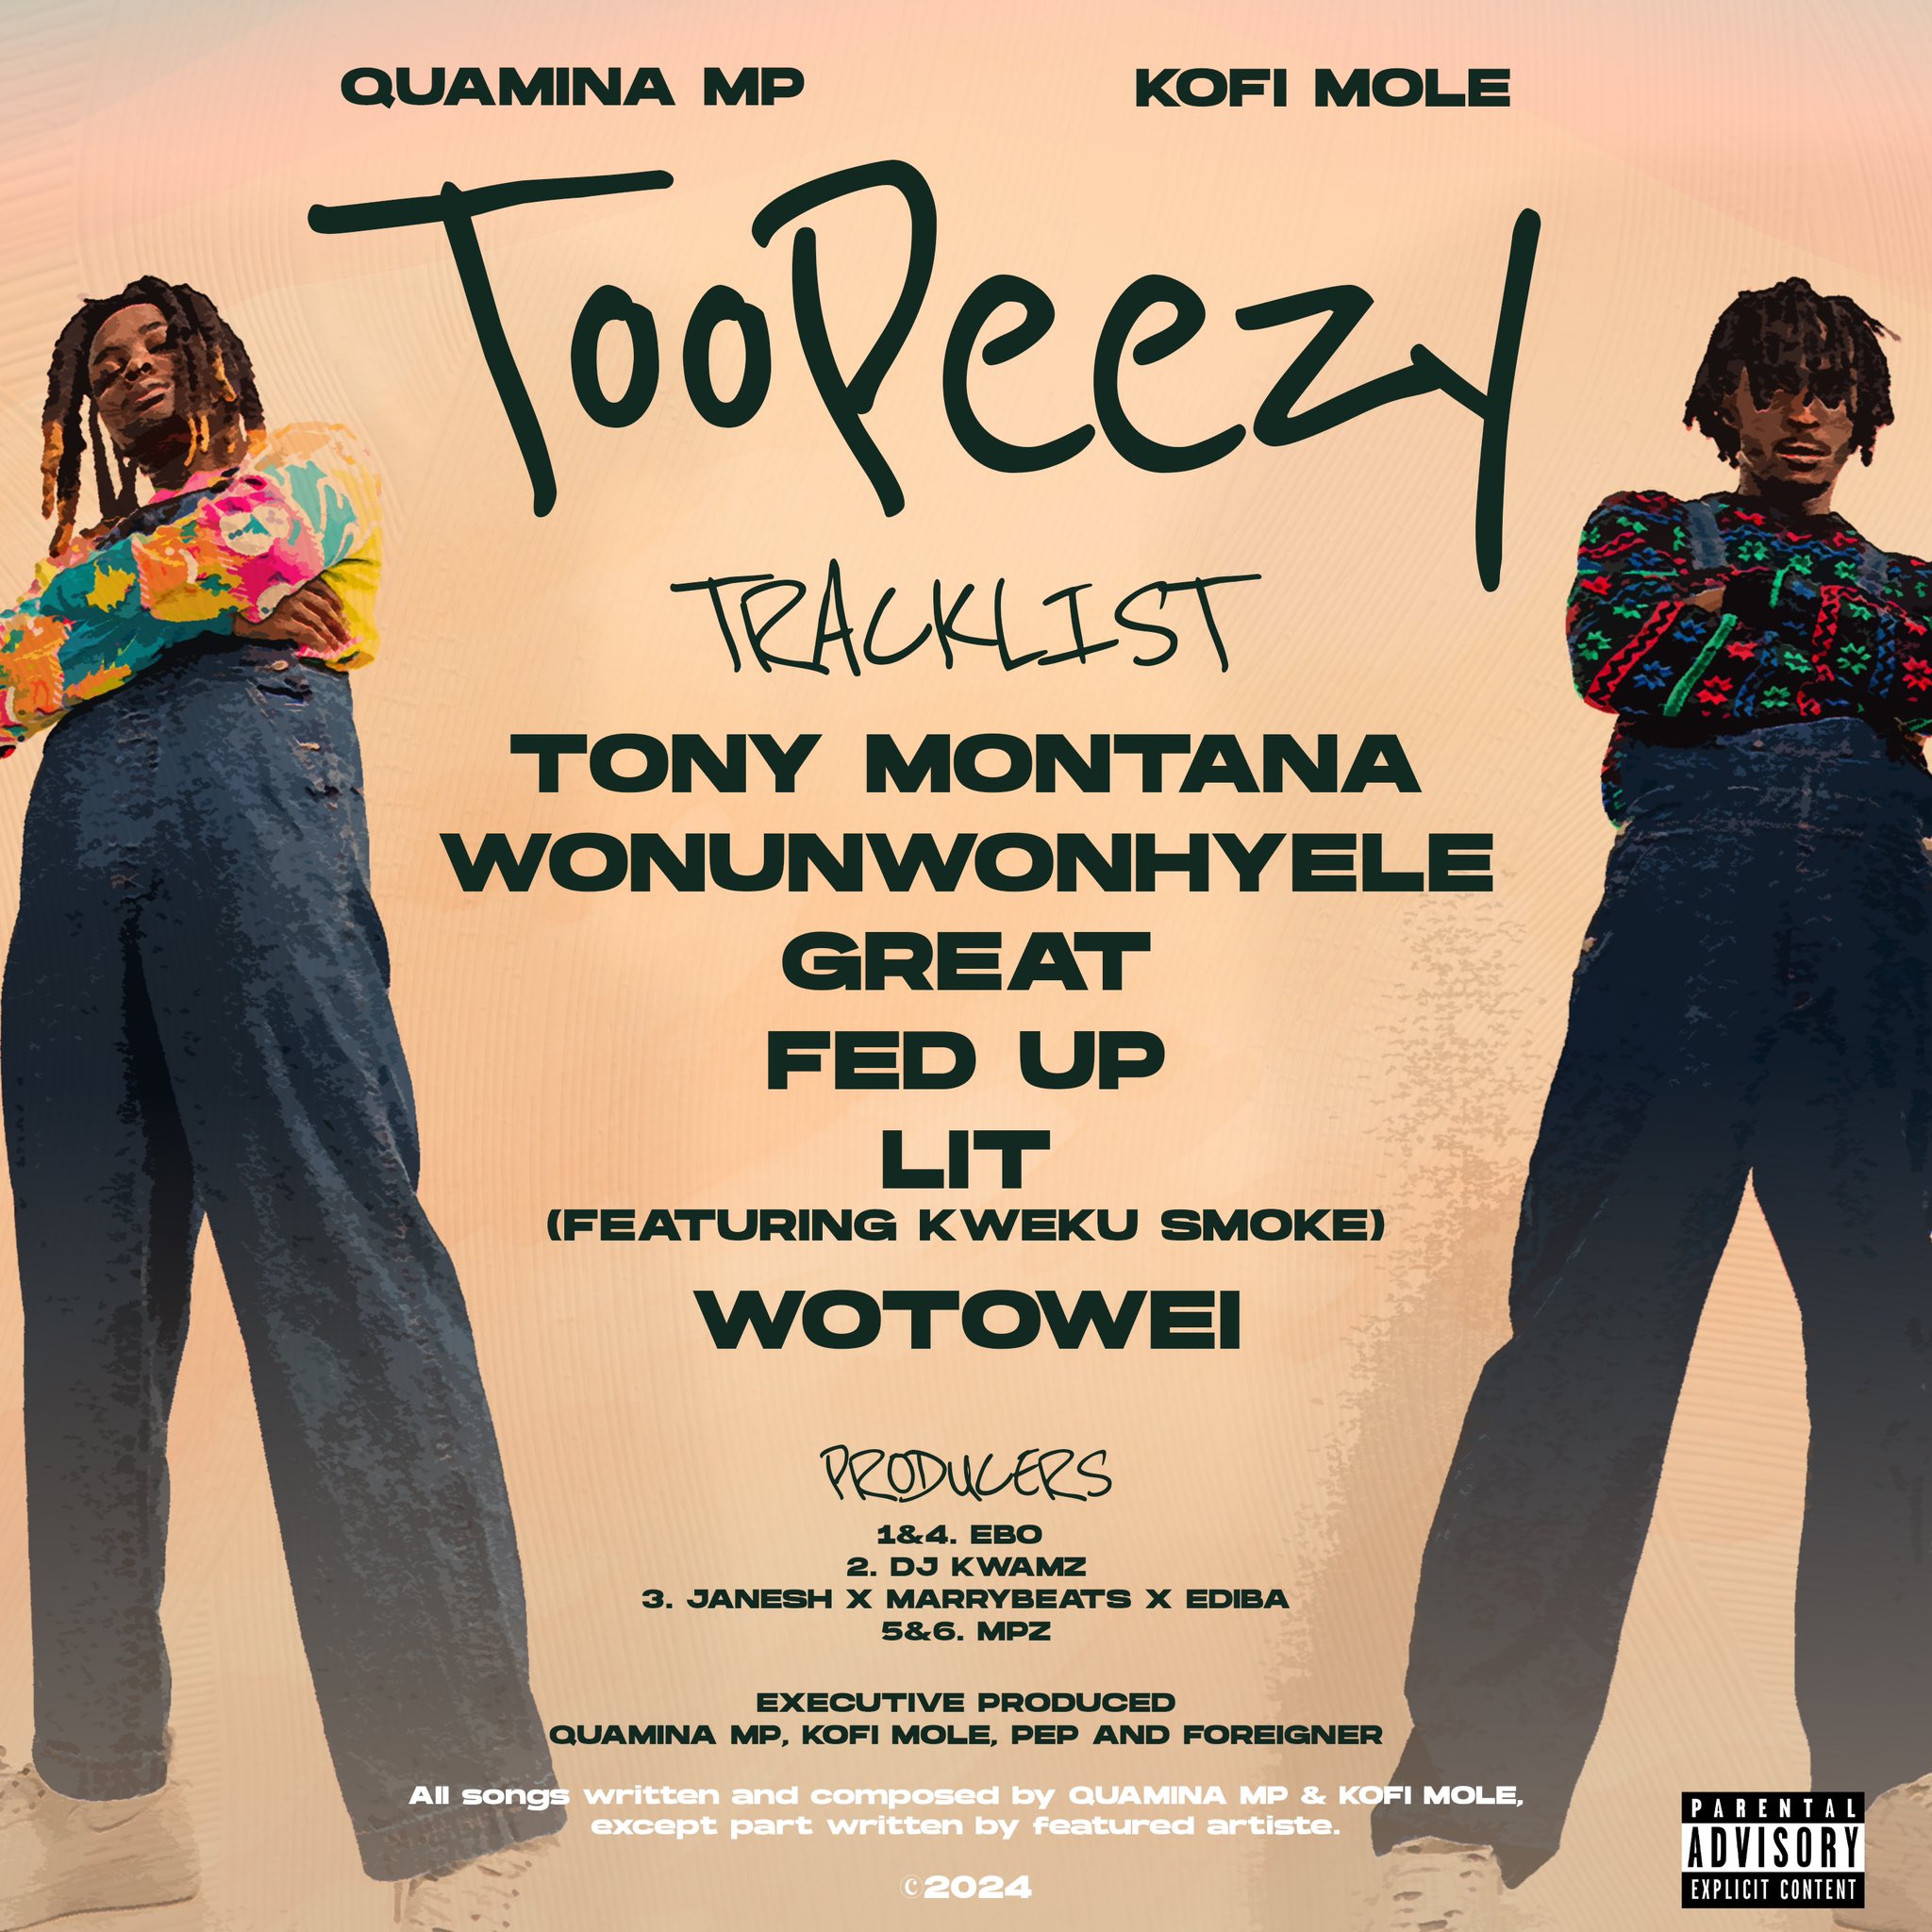 Quamina MP & Kofi Mole – Toopeezy EP (Full Album) Tracklist